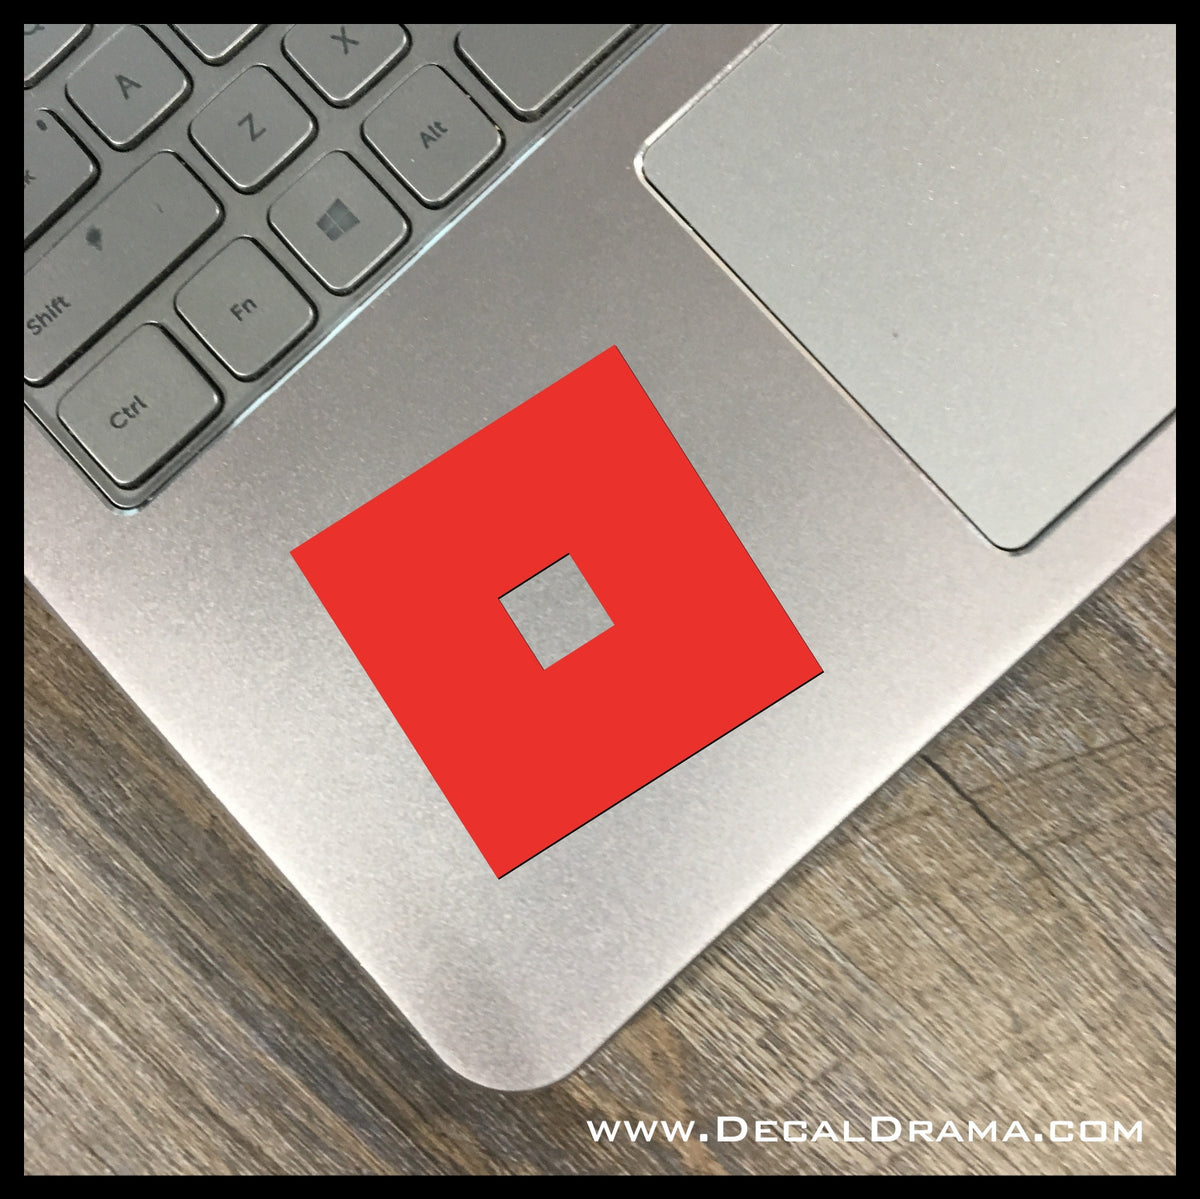 Roblox emblem Logo Vinyl Car/Laptop Decal – Decal Drama